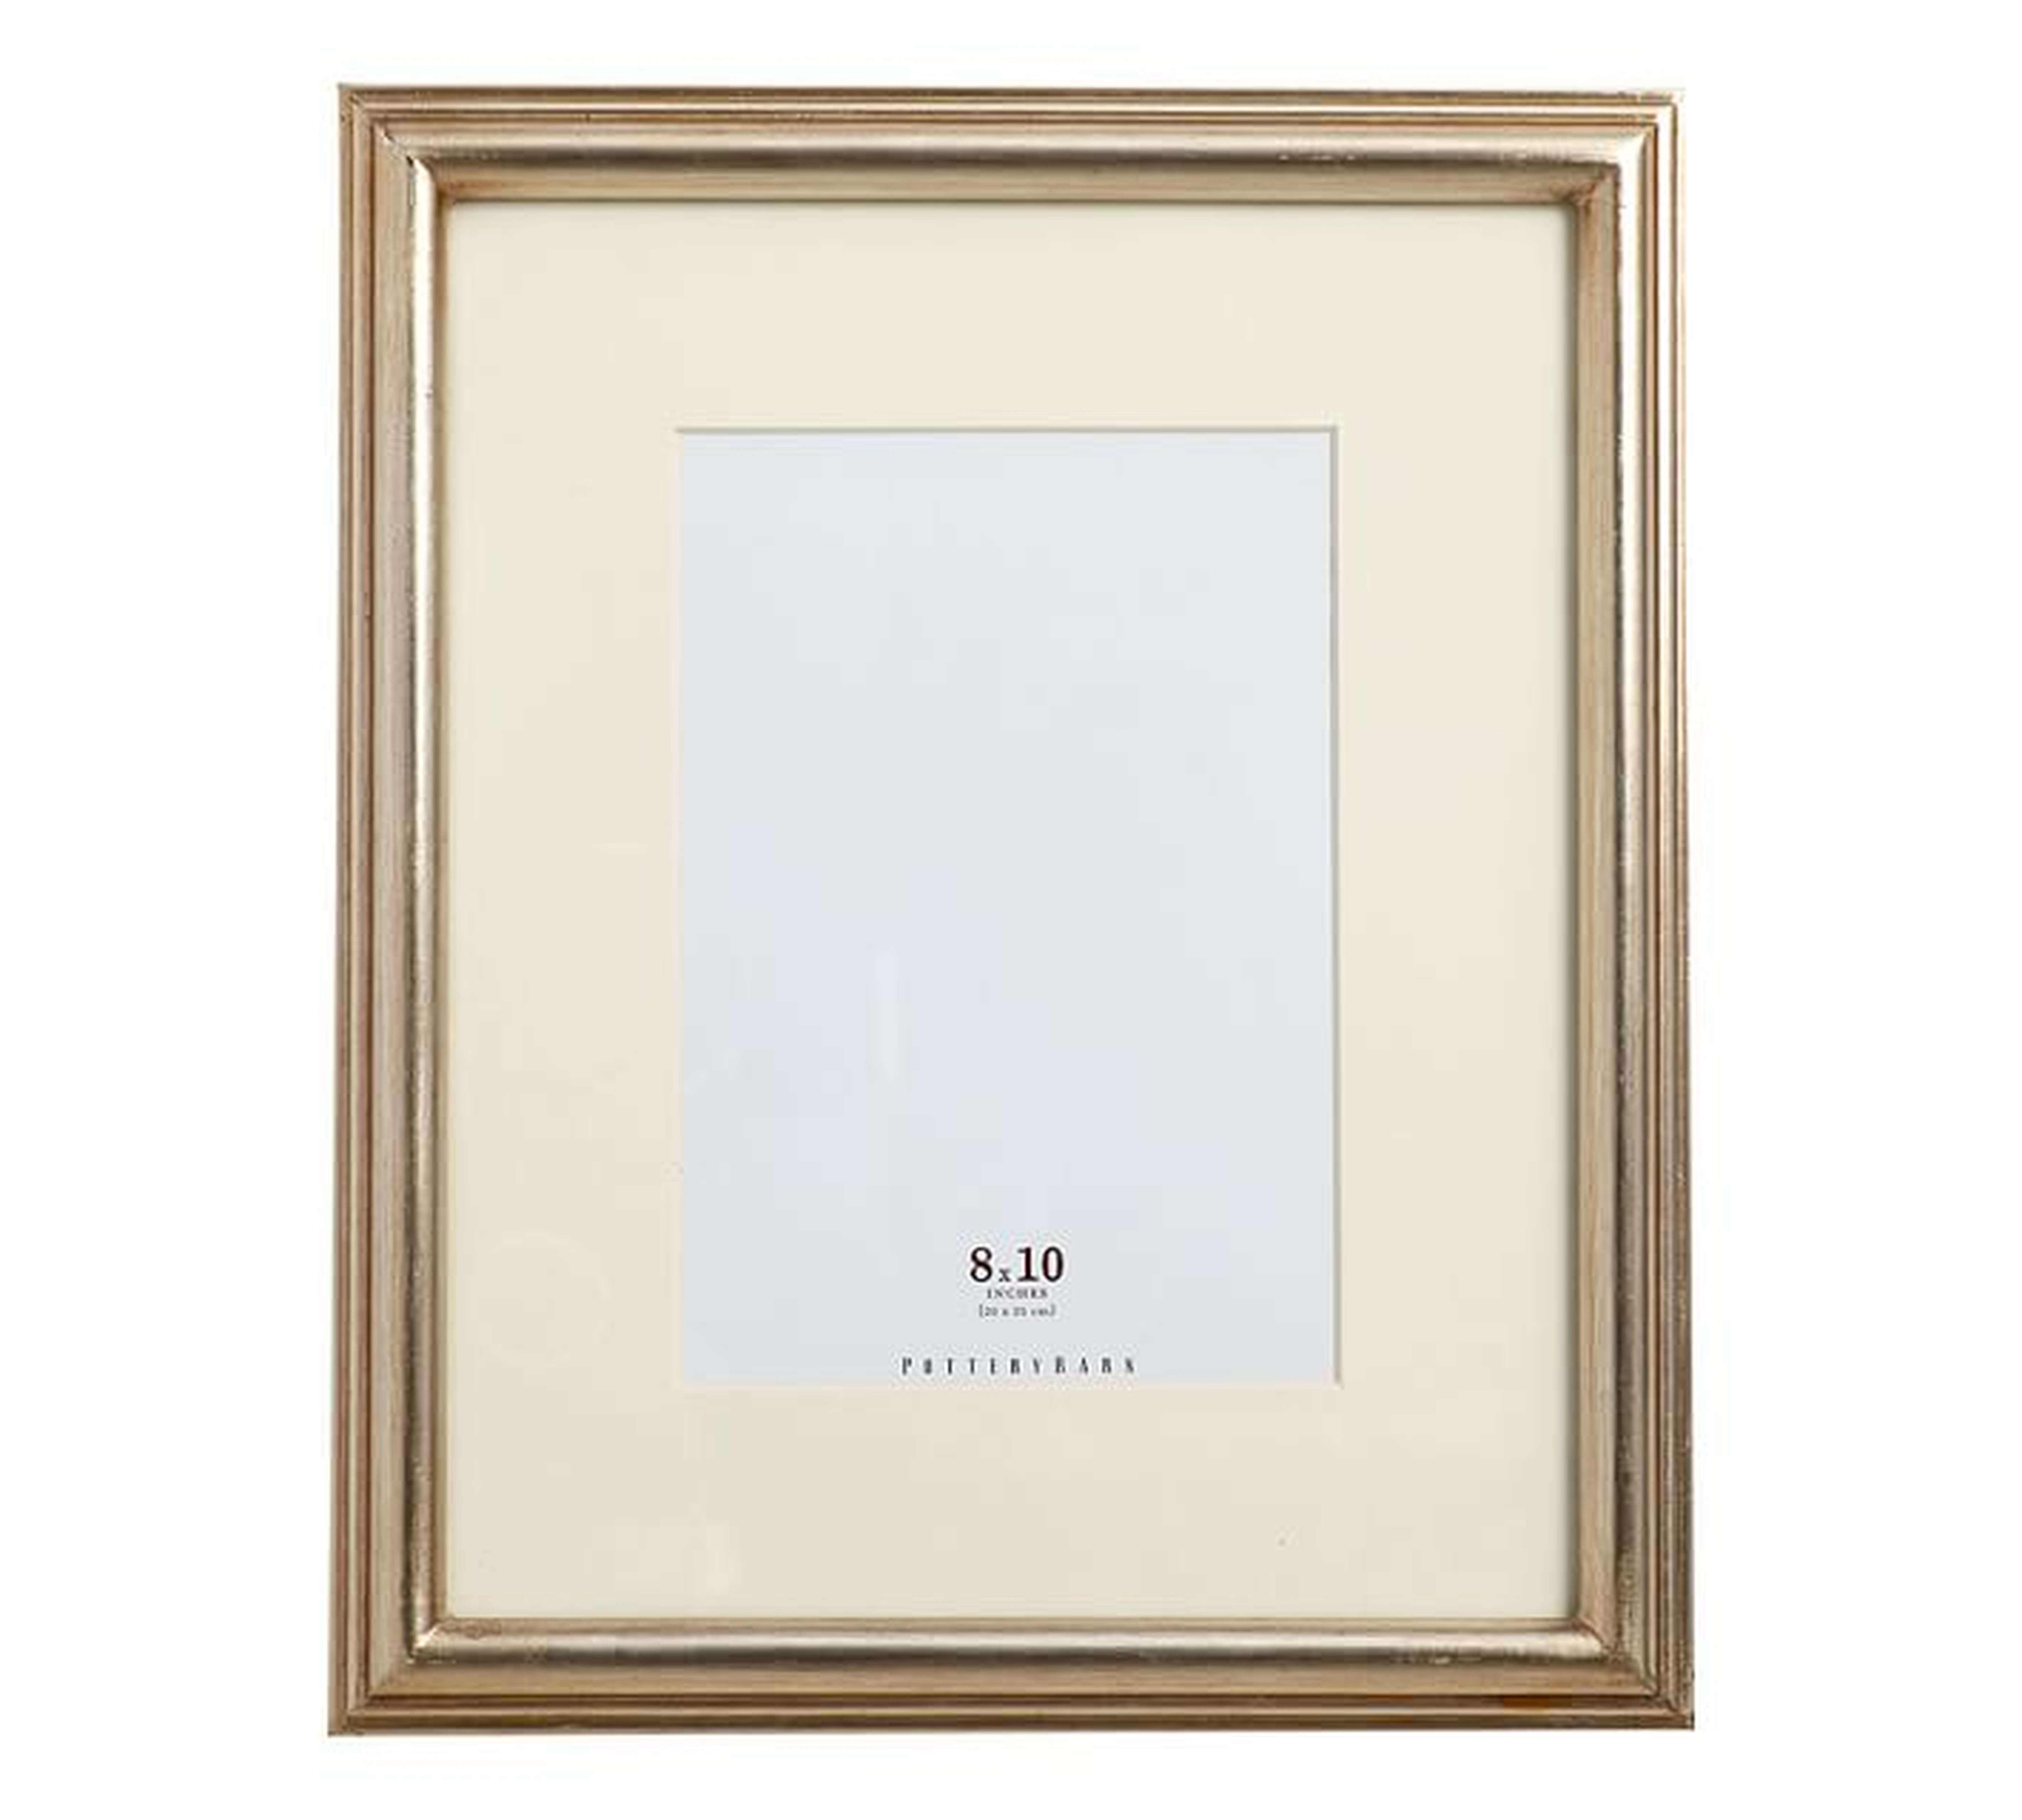 Eliza Gilt Picture Frame, 8 x 10" Medium Frame, Champagne Gilt finish - Pottery Barn